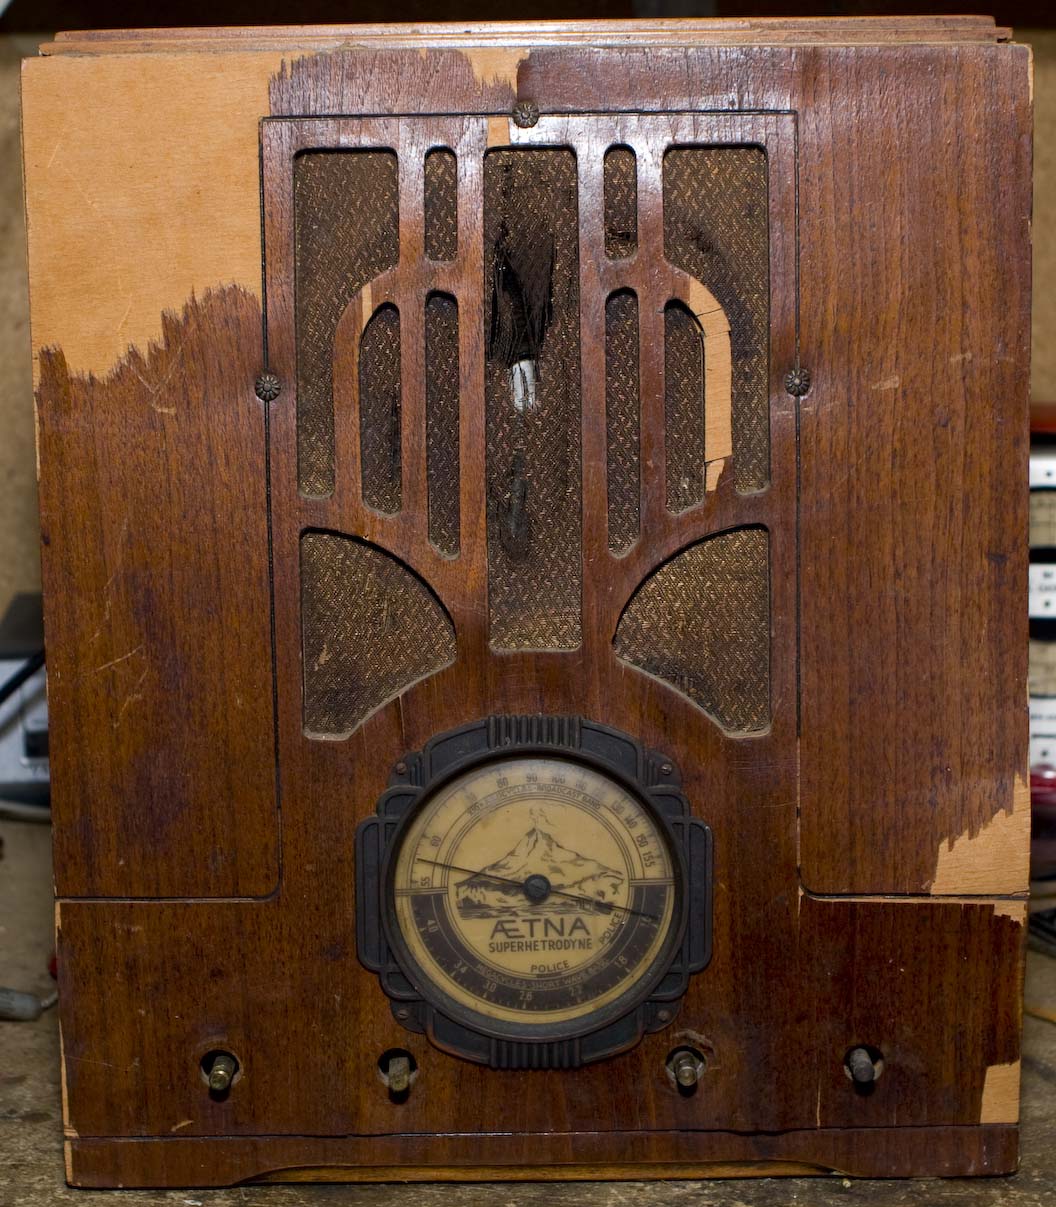 Aetna 502 tombstone radio (poor cabinet)